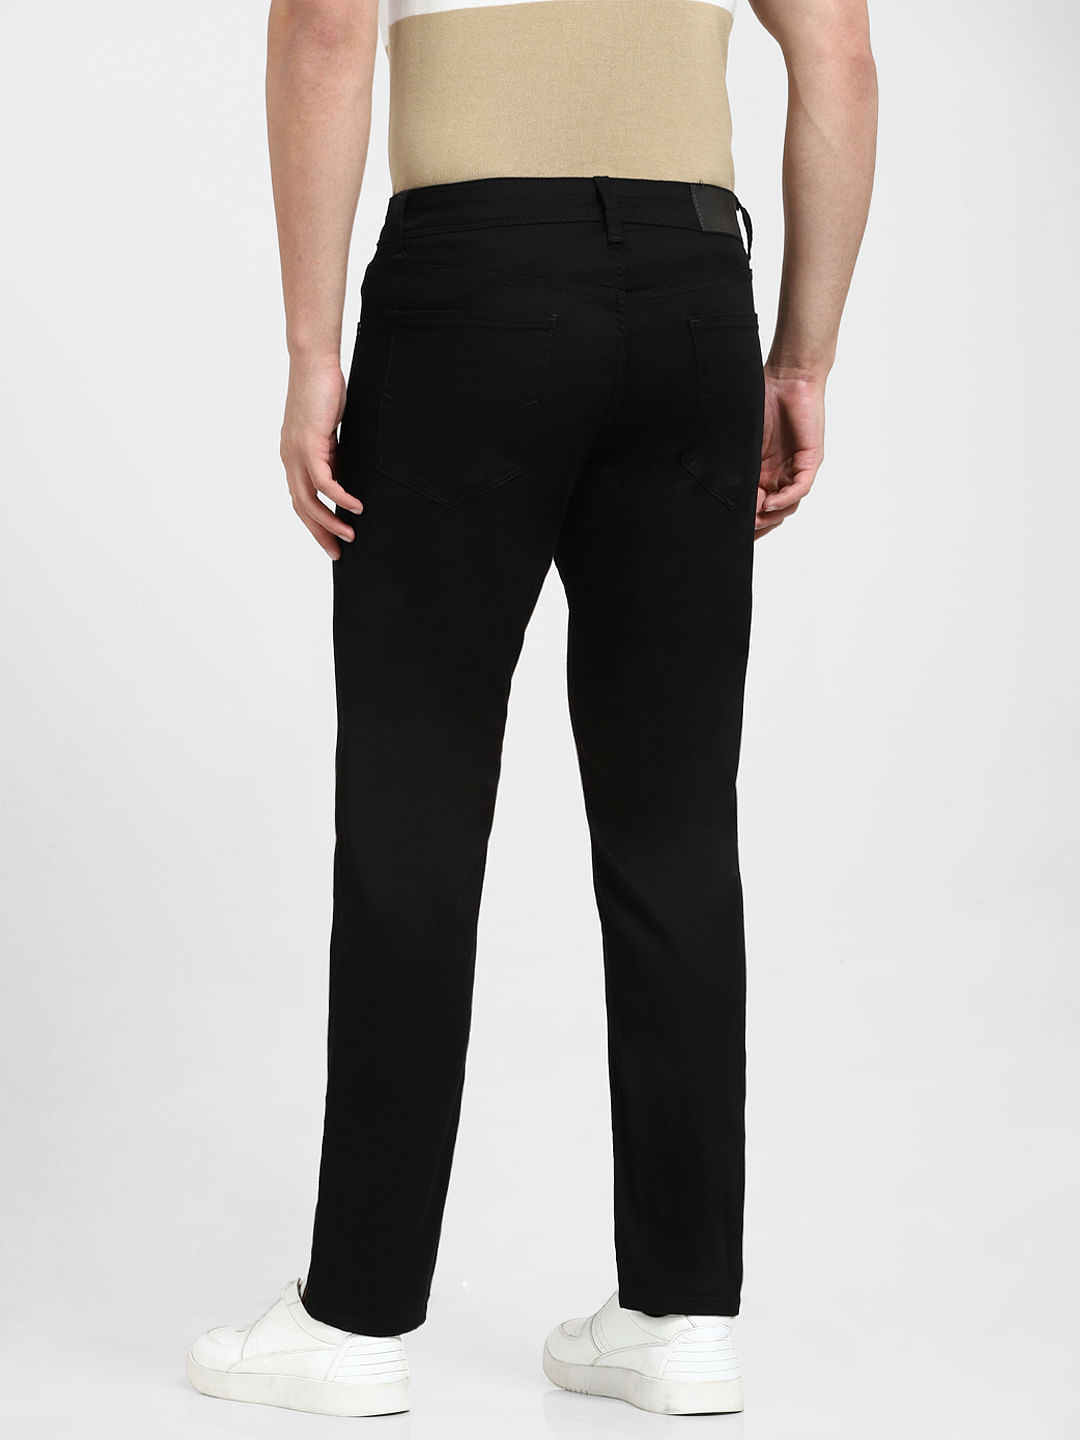 Buy Men Black Mid Slim Fit Jeans Online - 777616 | Louis Philippe